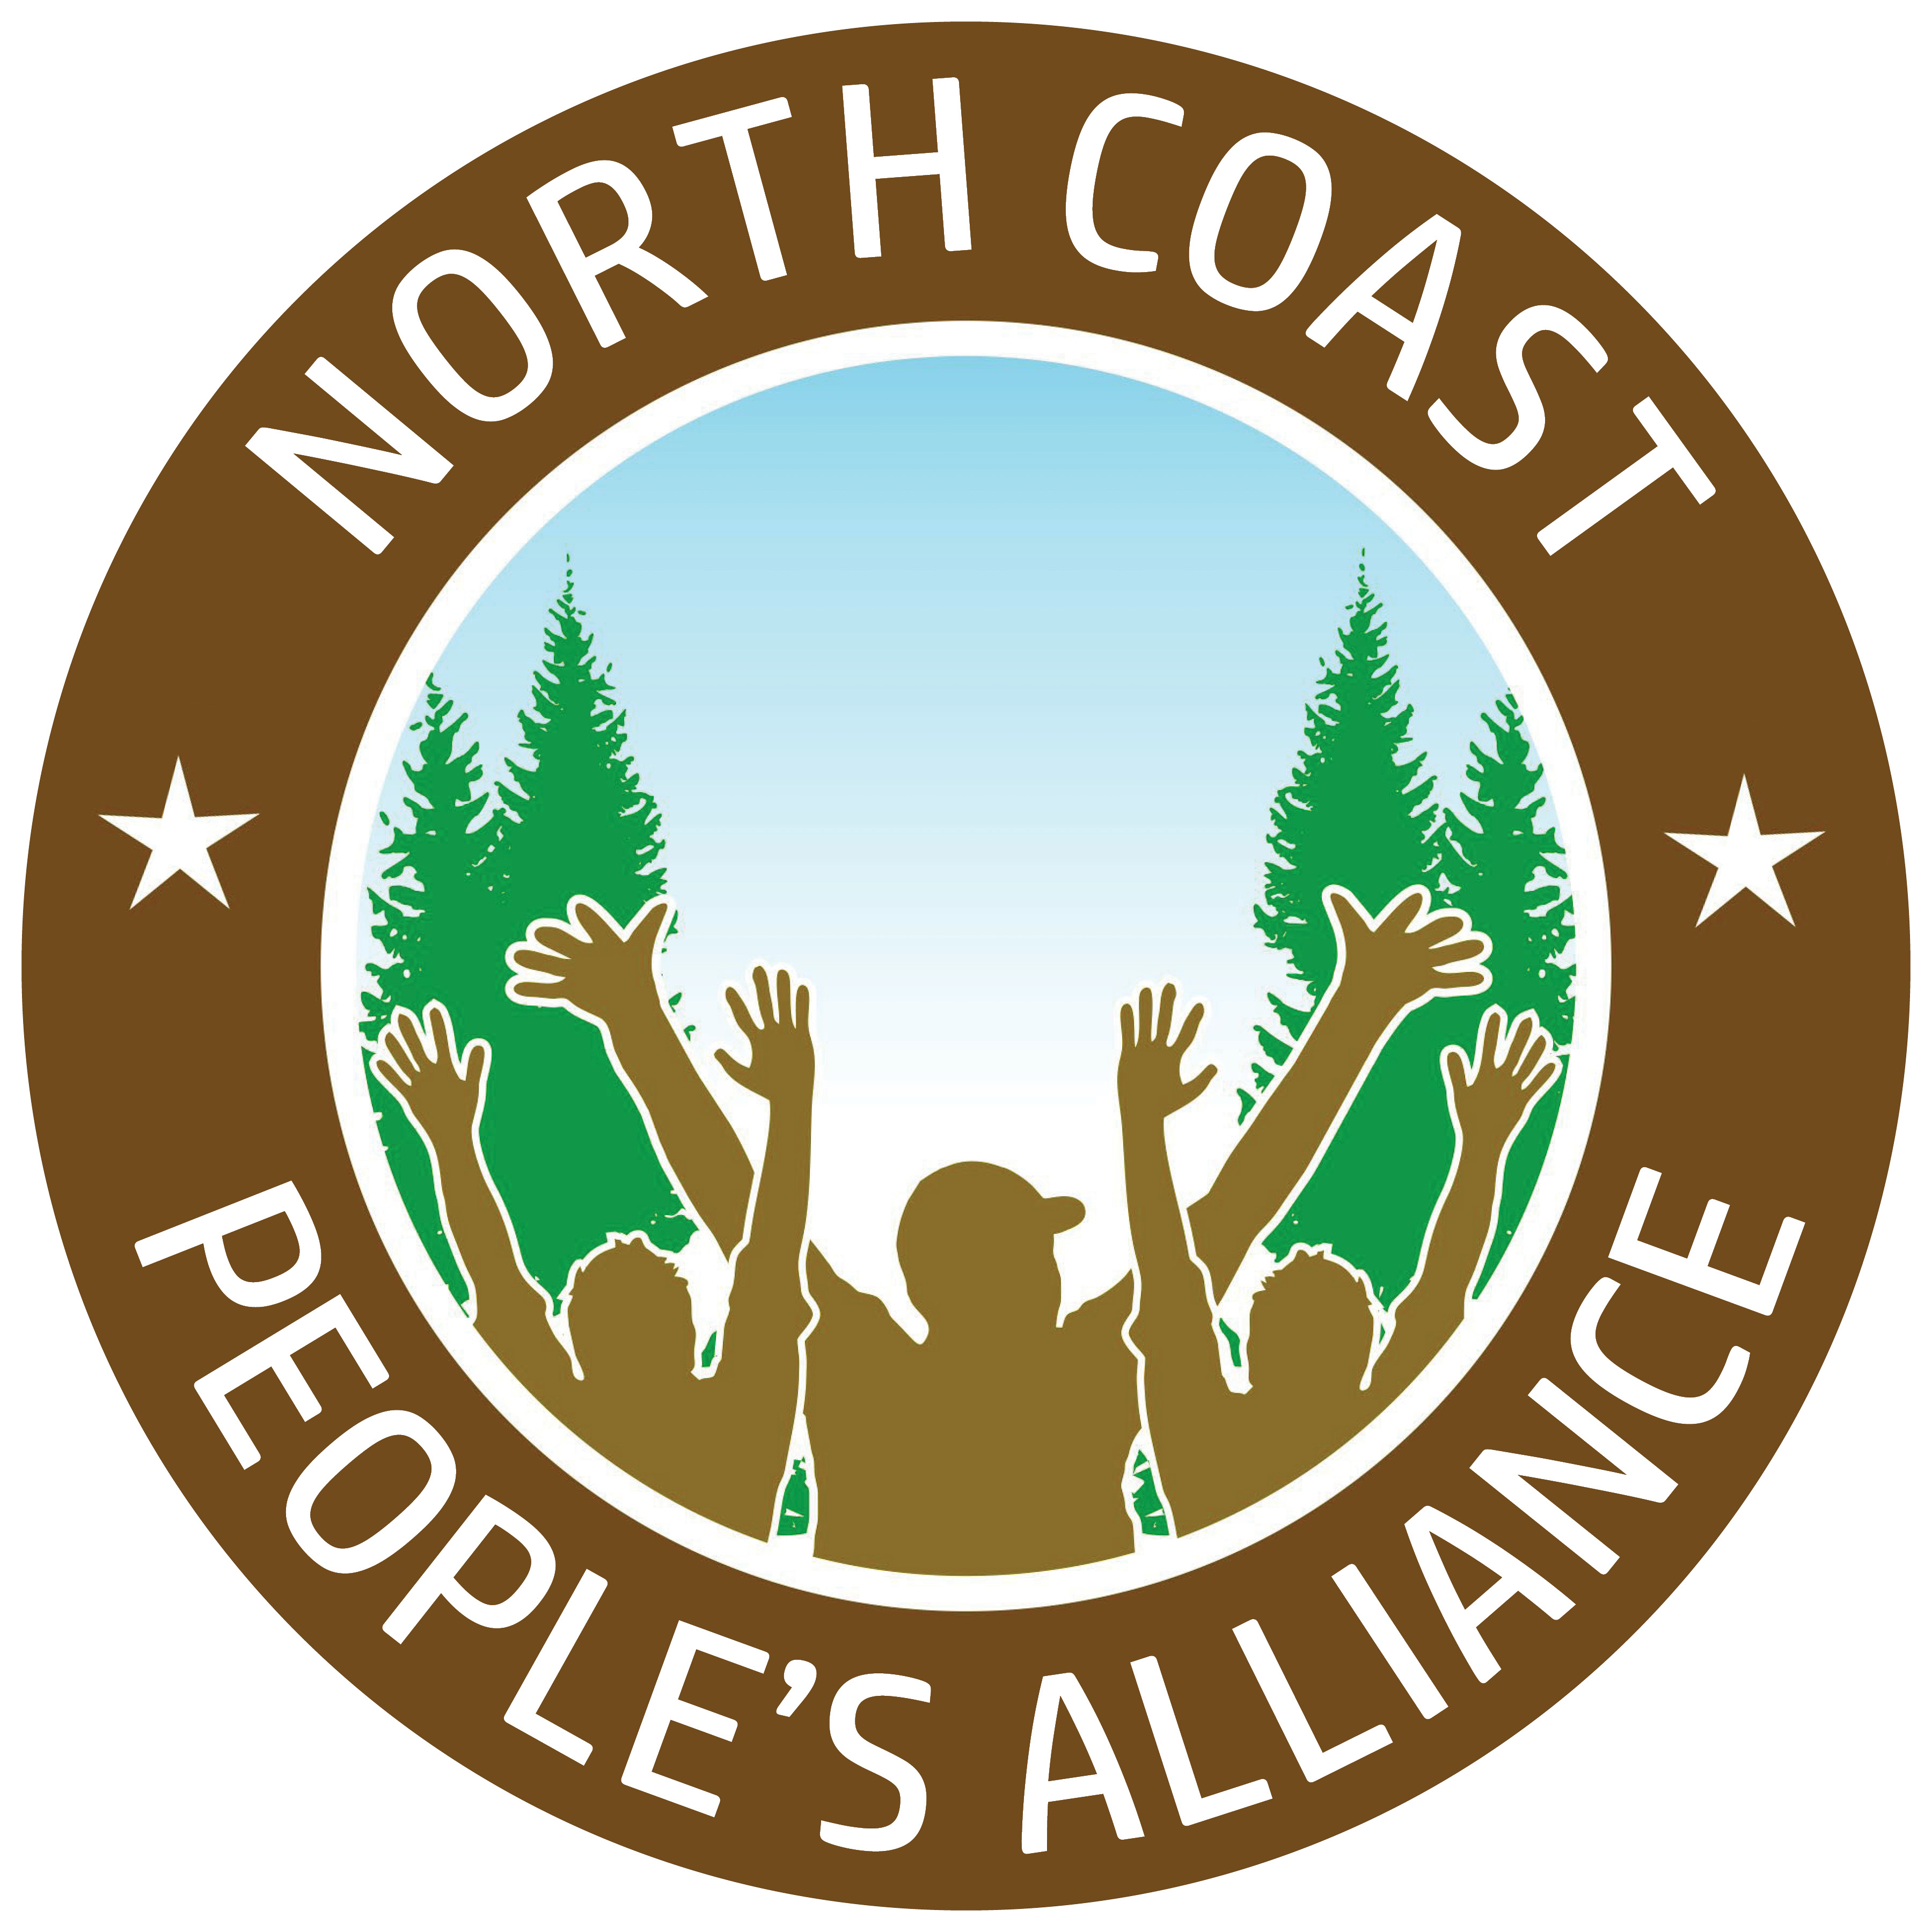 North Coast People's Alliance Endorsement